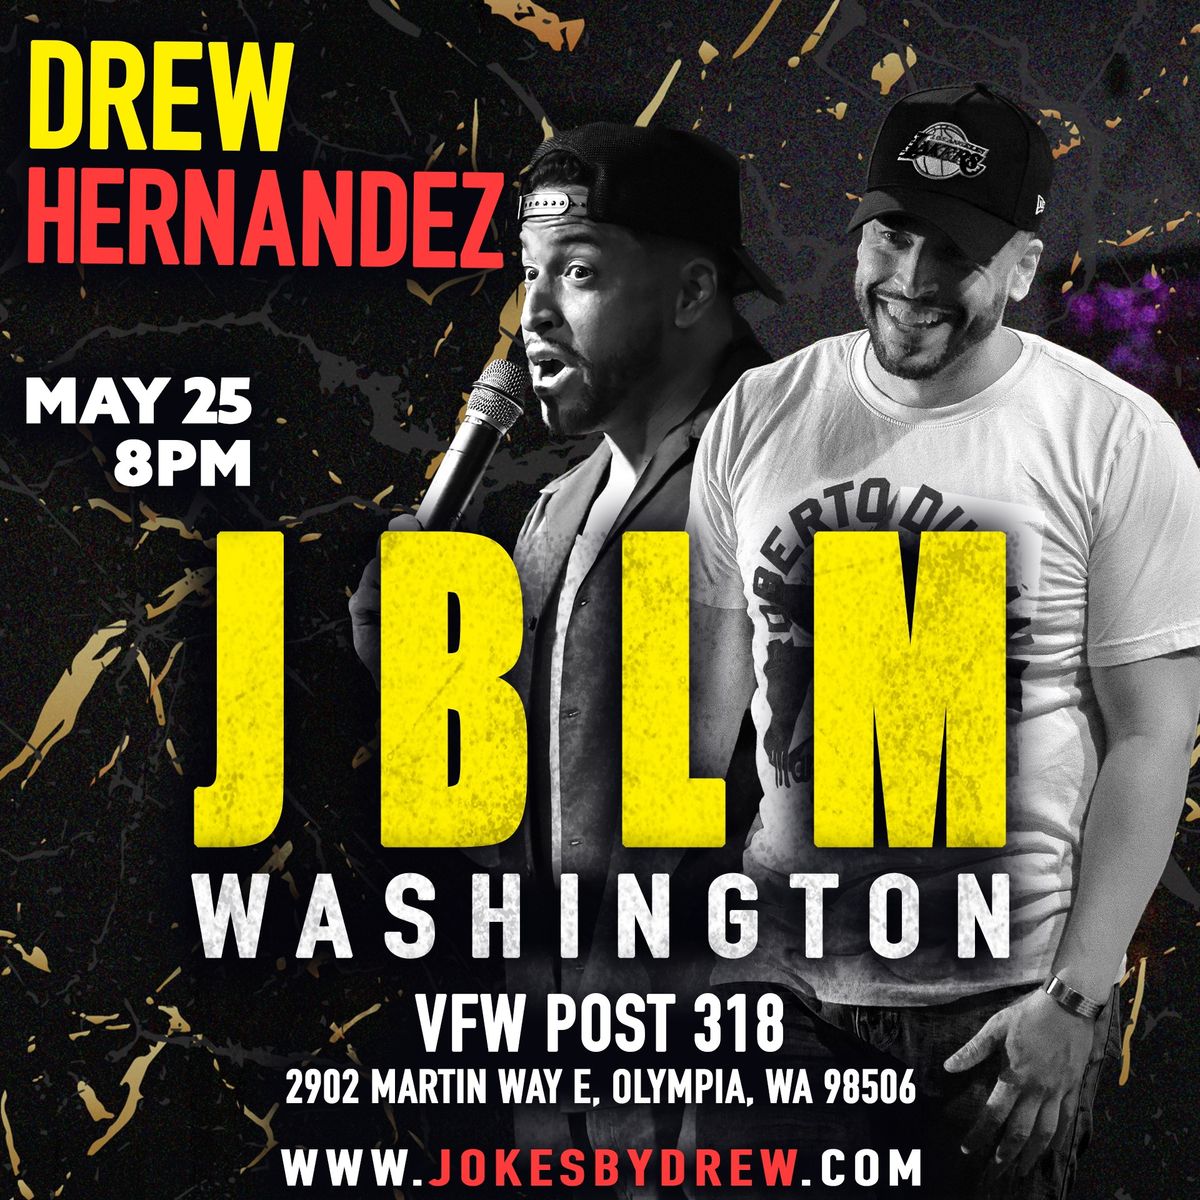 Drew Hernandez in Washington